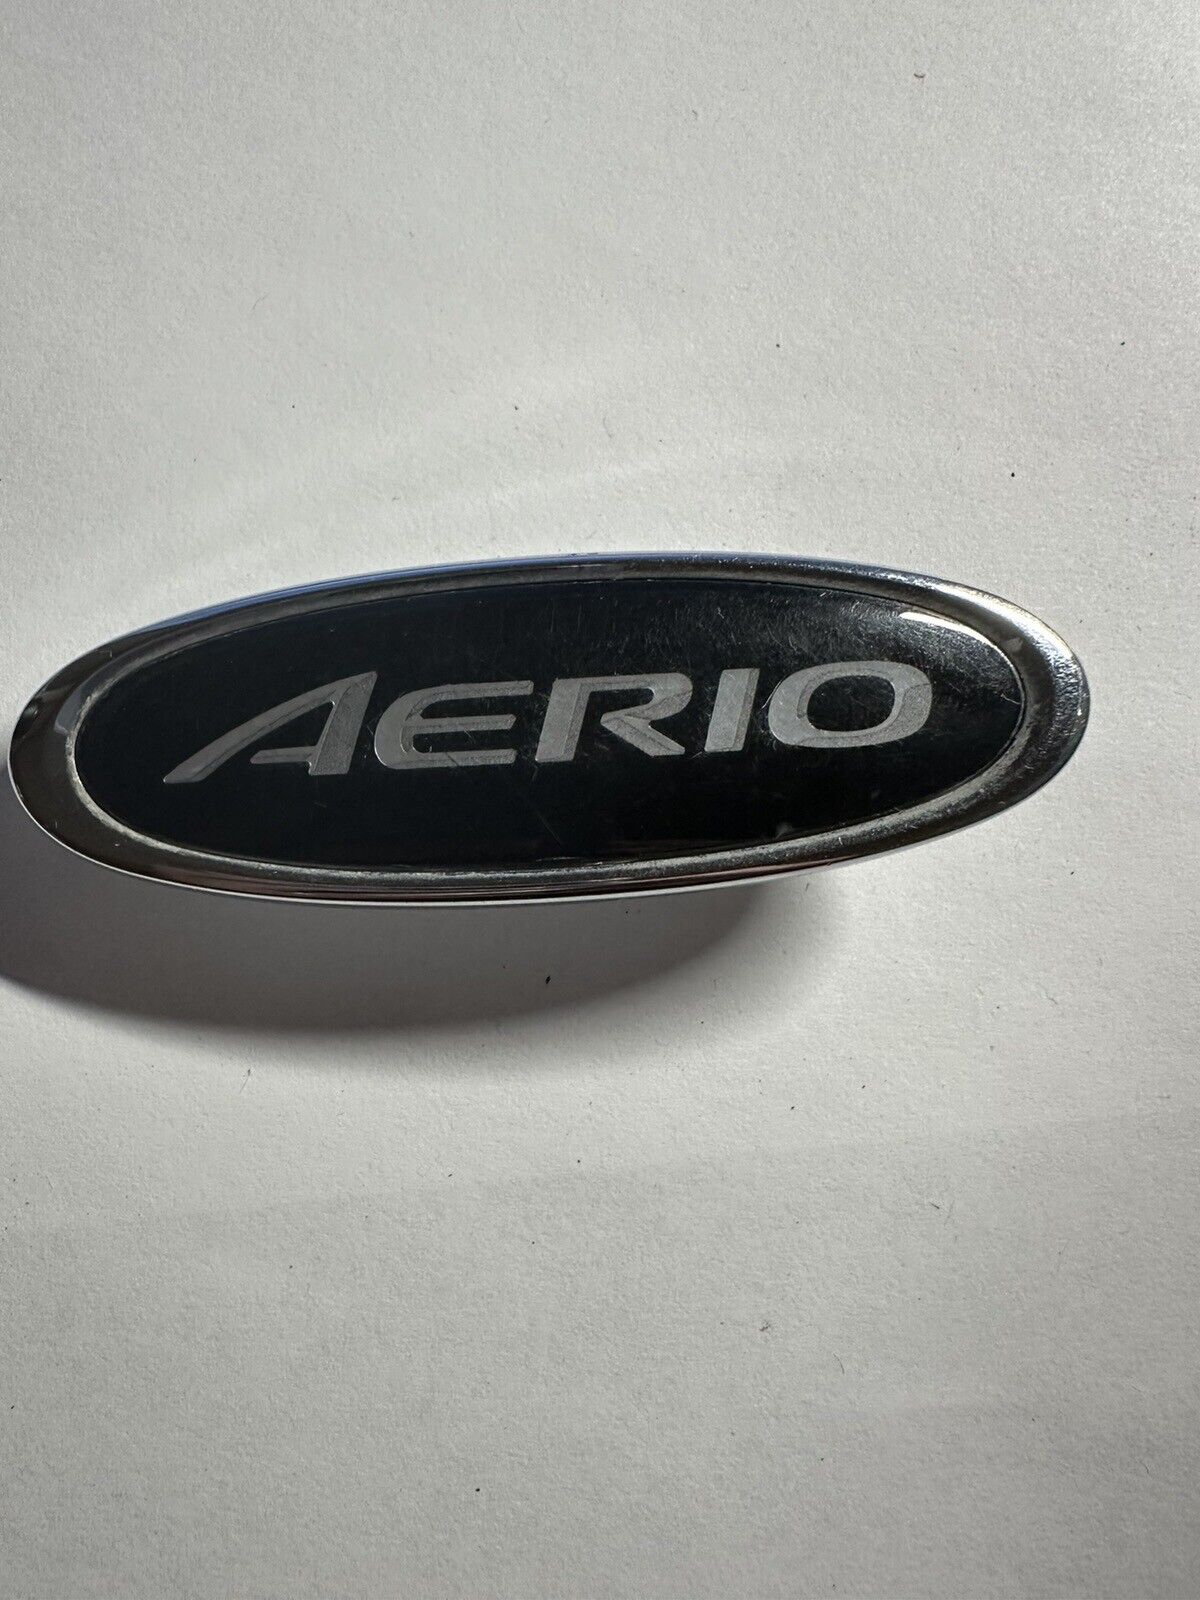 2002 2005 2006 2007 Suzuki Aerio Left Driver Side Fender Emblem Logo Badge OEM